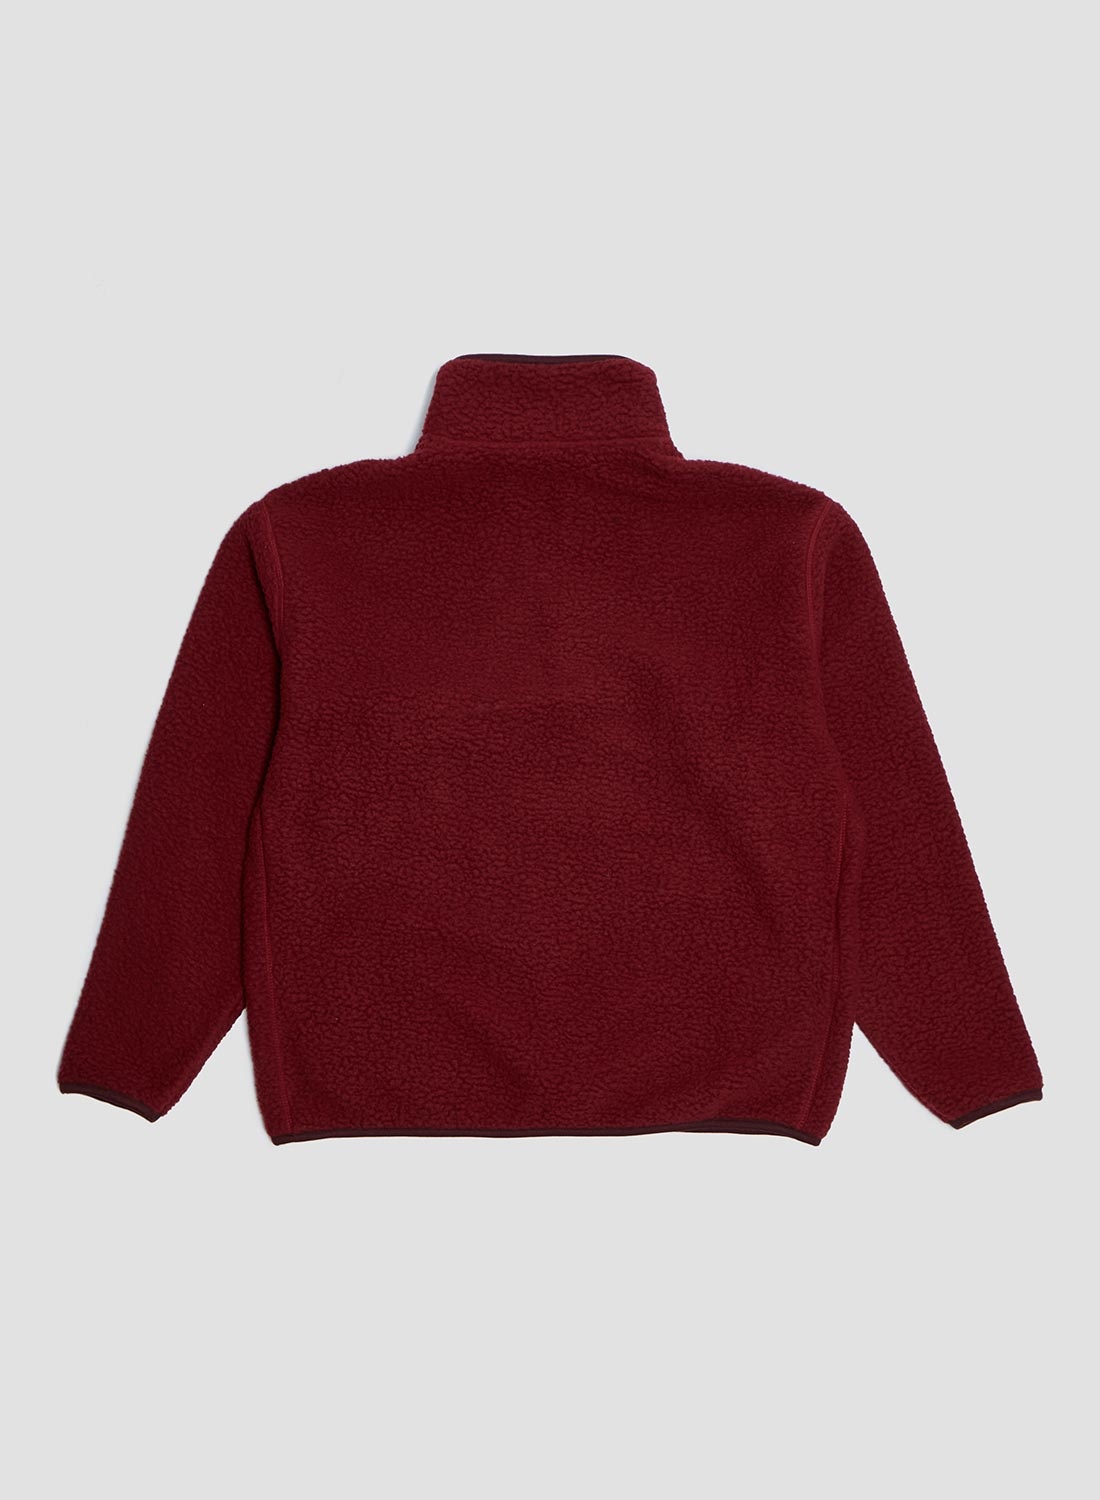 Wild Bricks Fleece Pullover in Red - 4